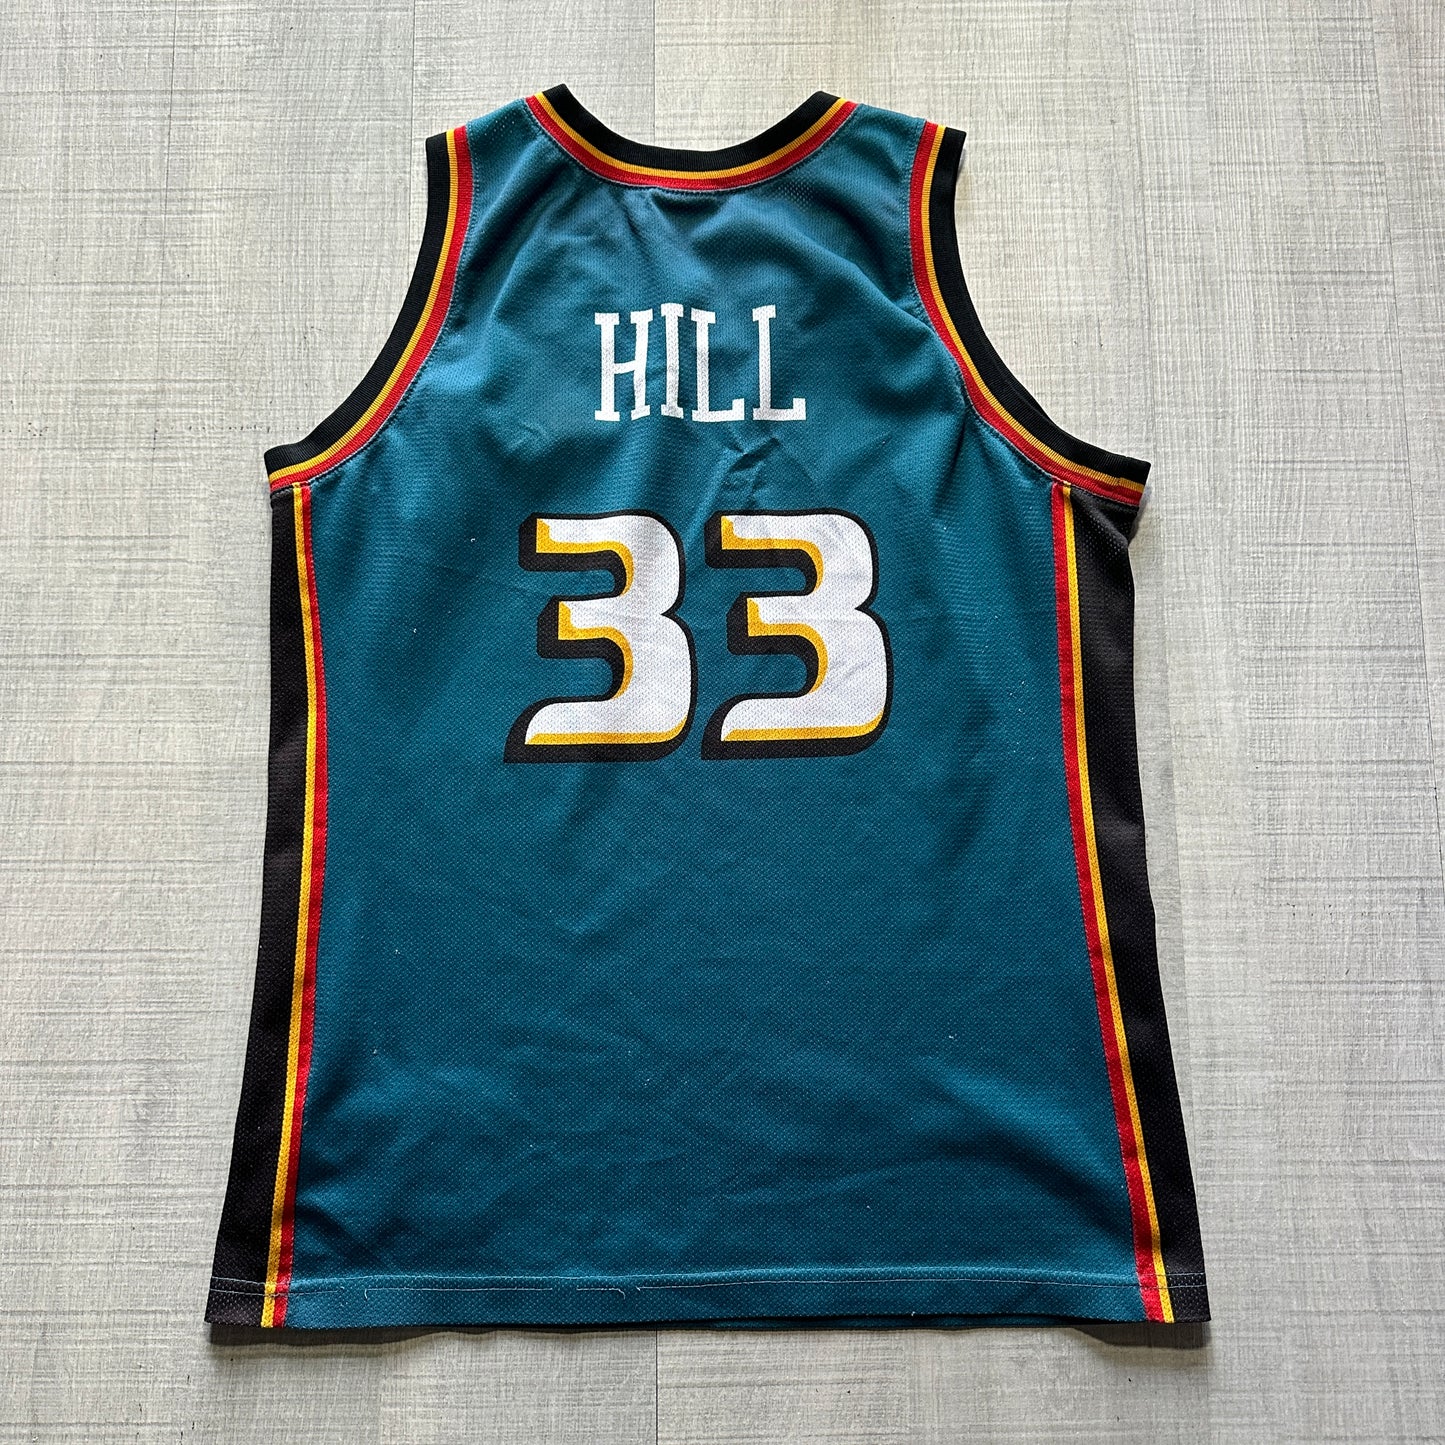 Grant Hill Detroit Pistons Champion Jersey